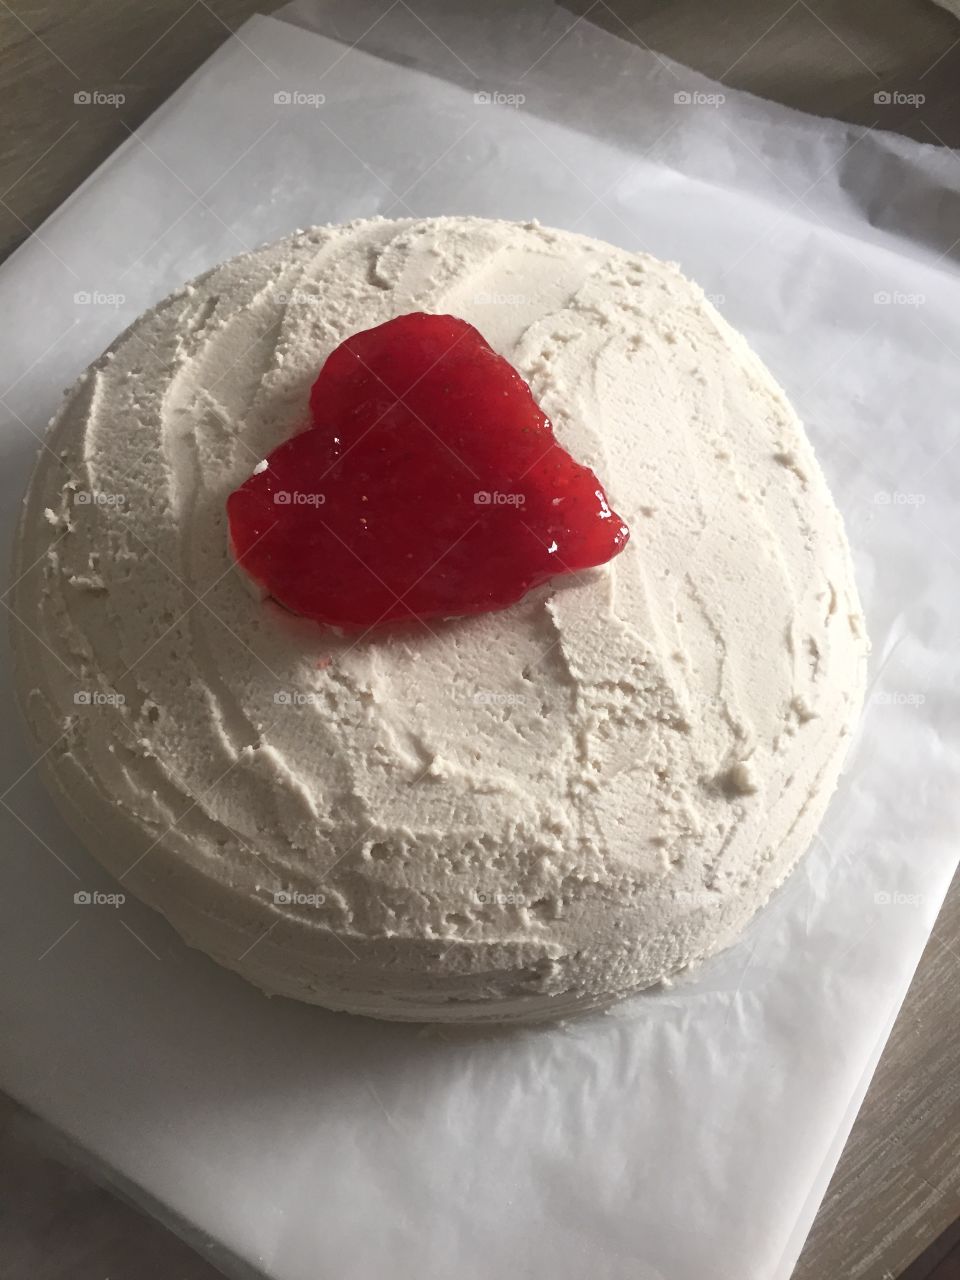 Sweetheart cake